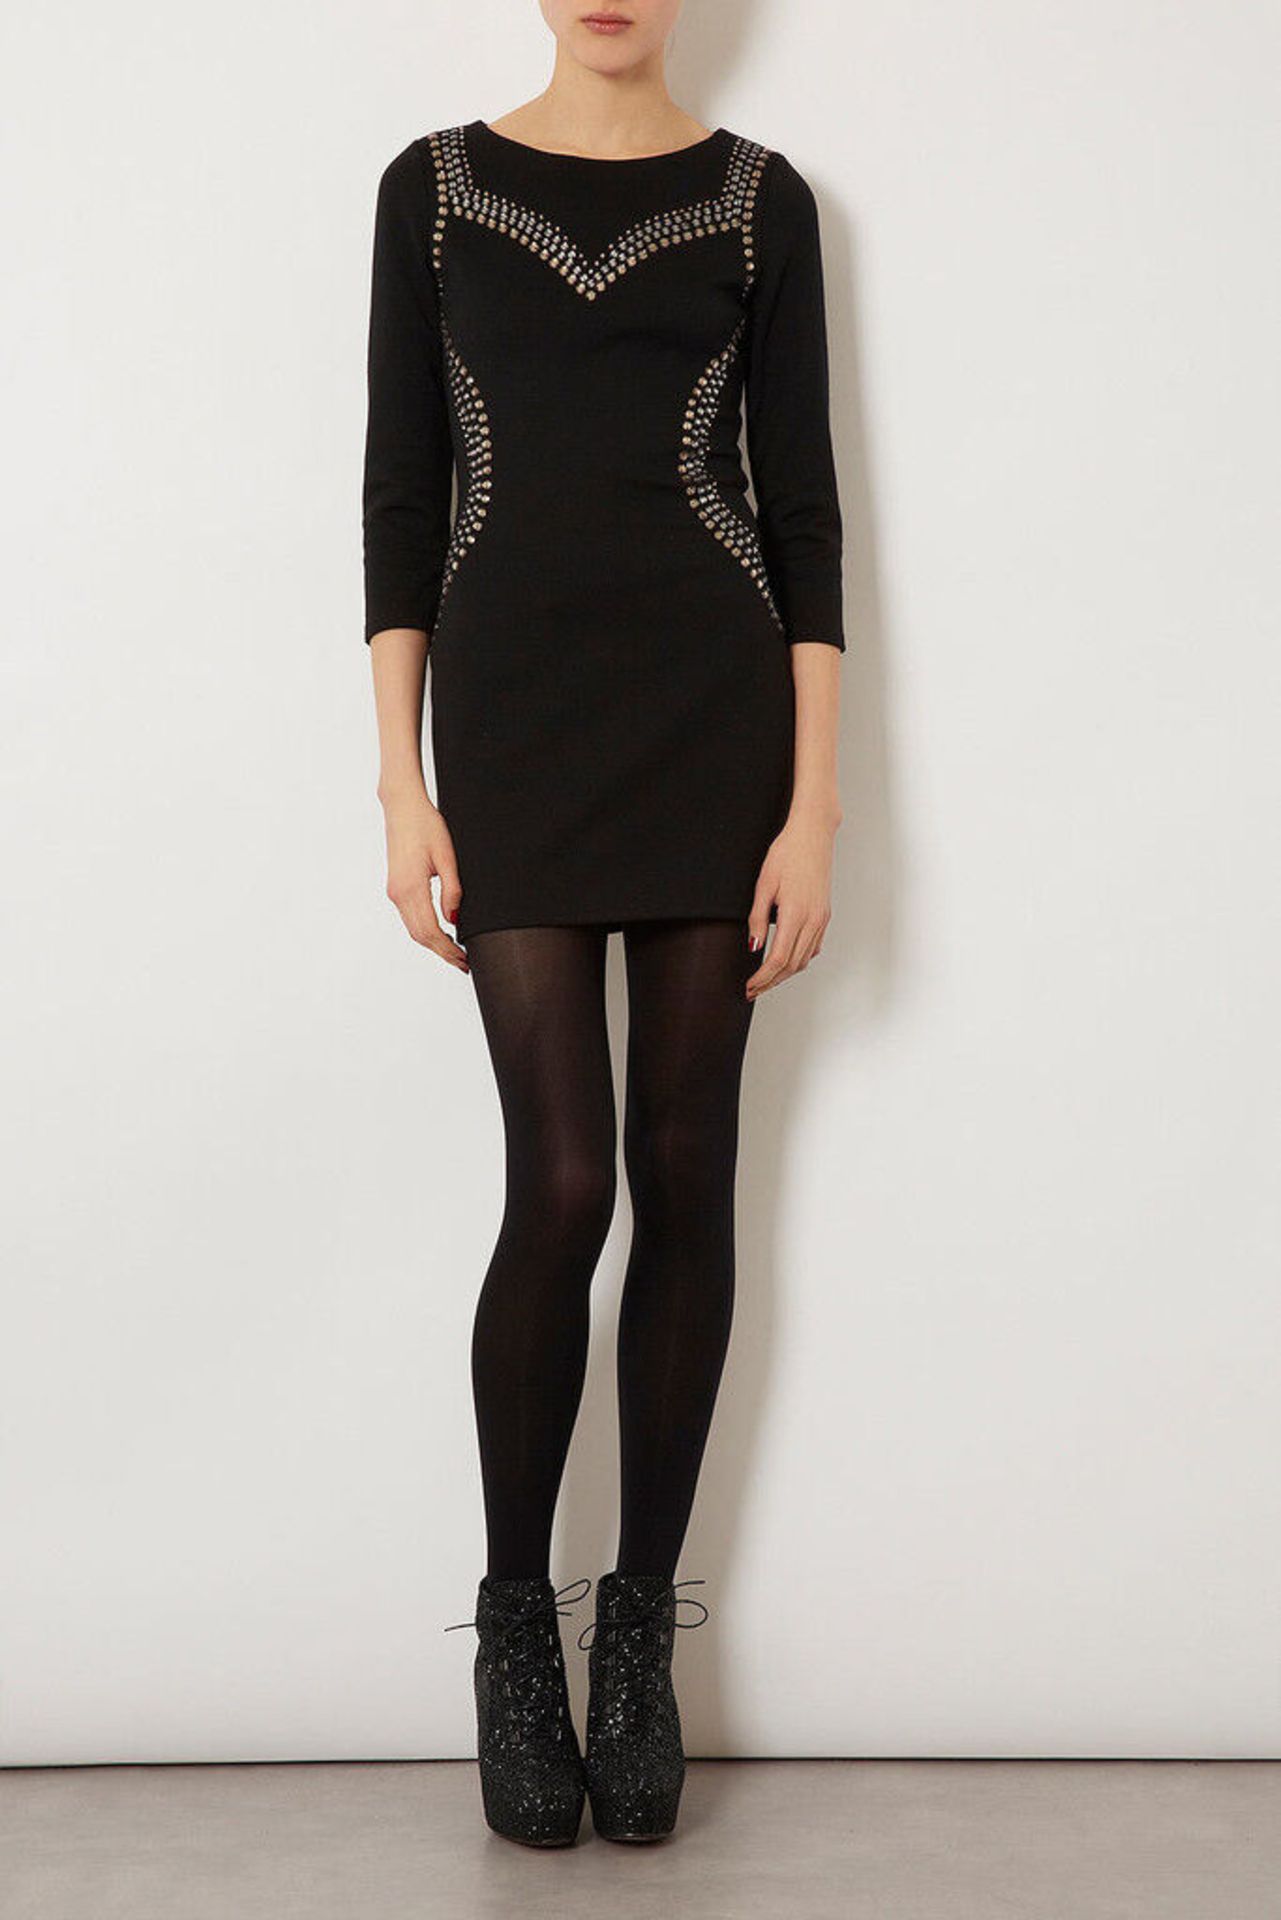 Liquidation Stock : Women's Black Embellished Dresses x 50 - Image 2 of 3